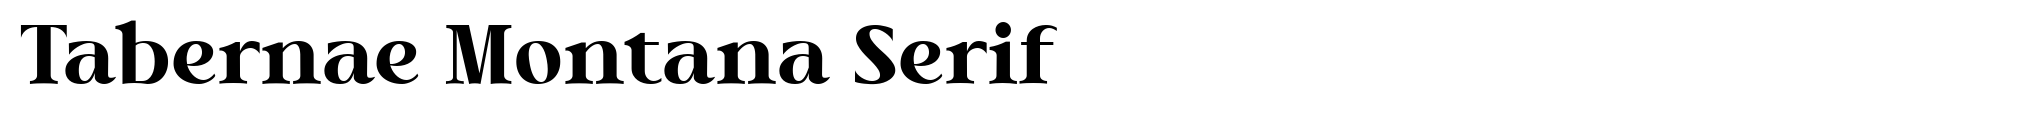 Tabernae Montana Serif image